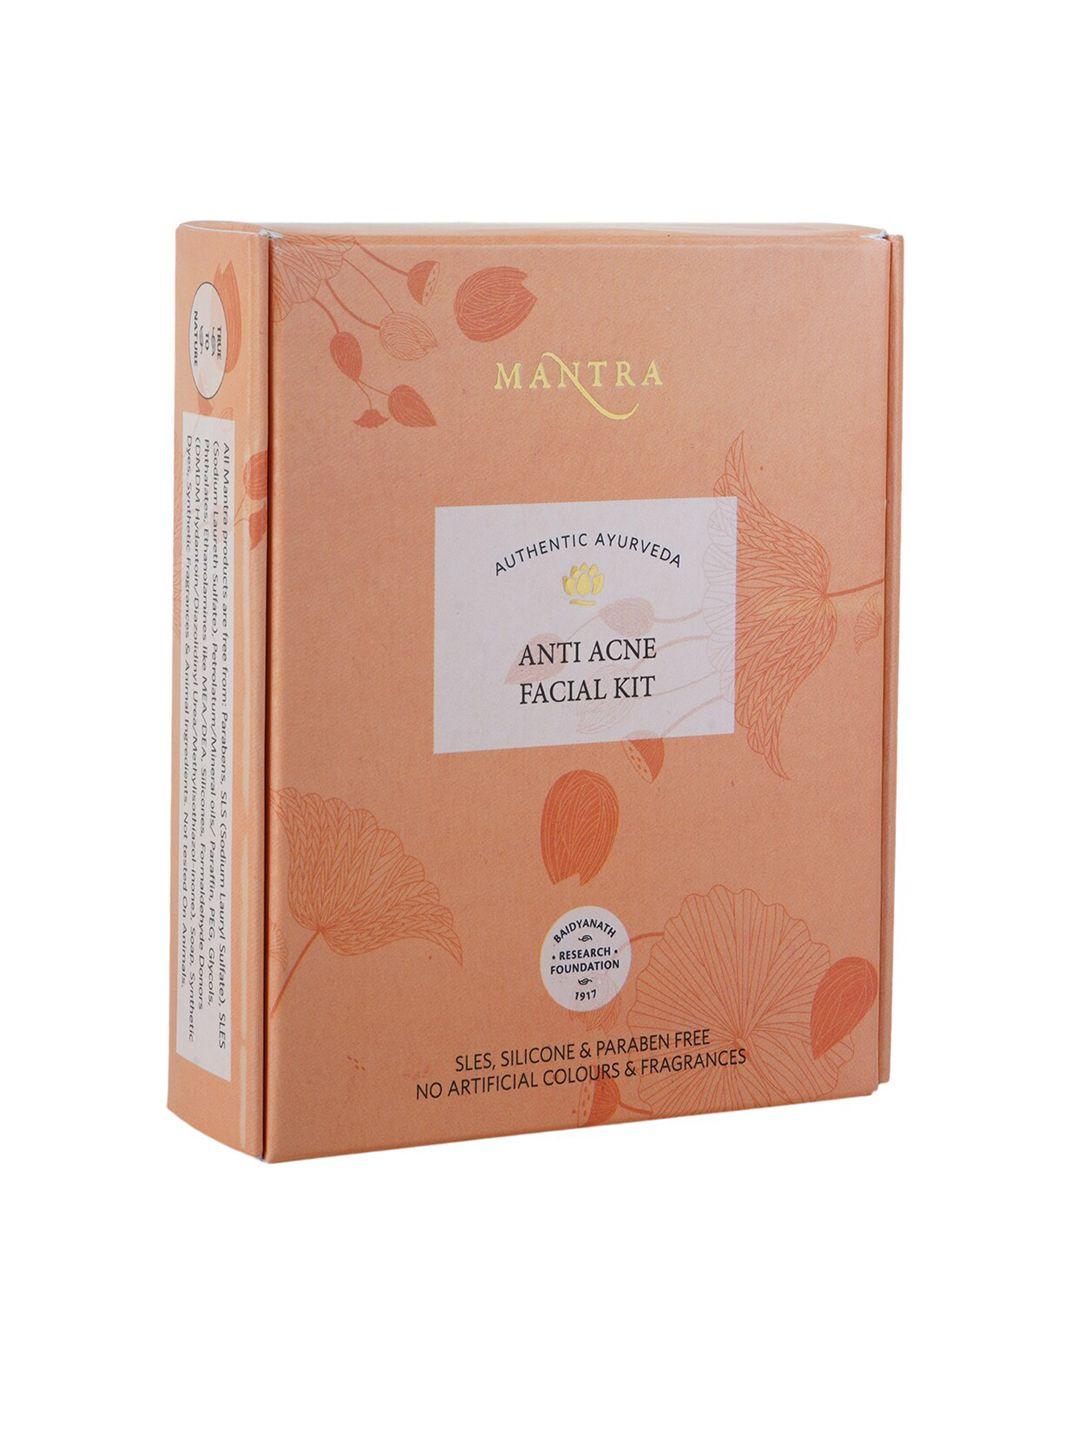 mantra herbal anti-acne facial kit - 24ml + 16g